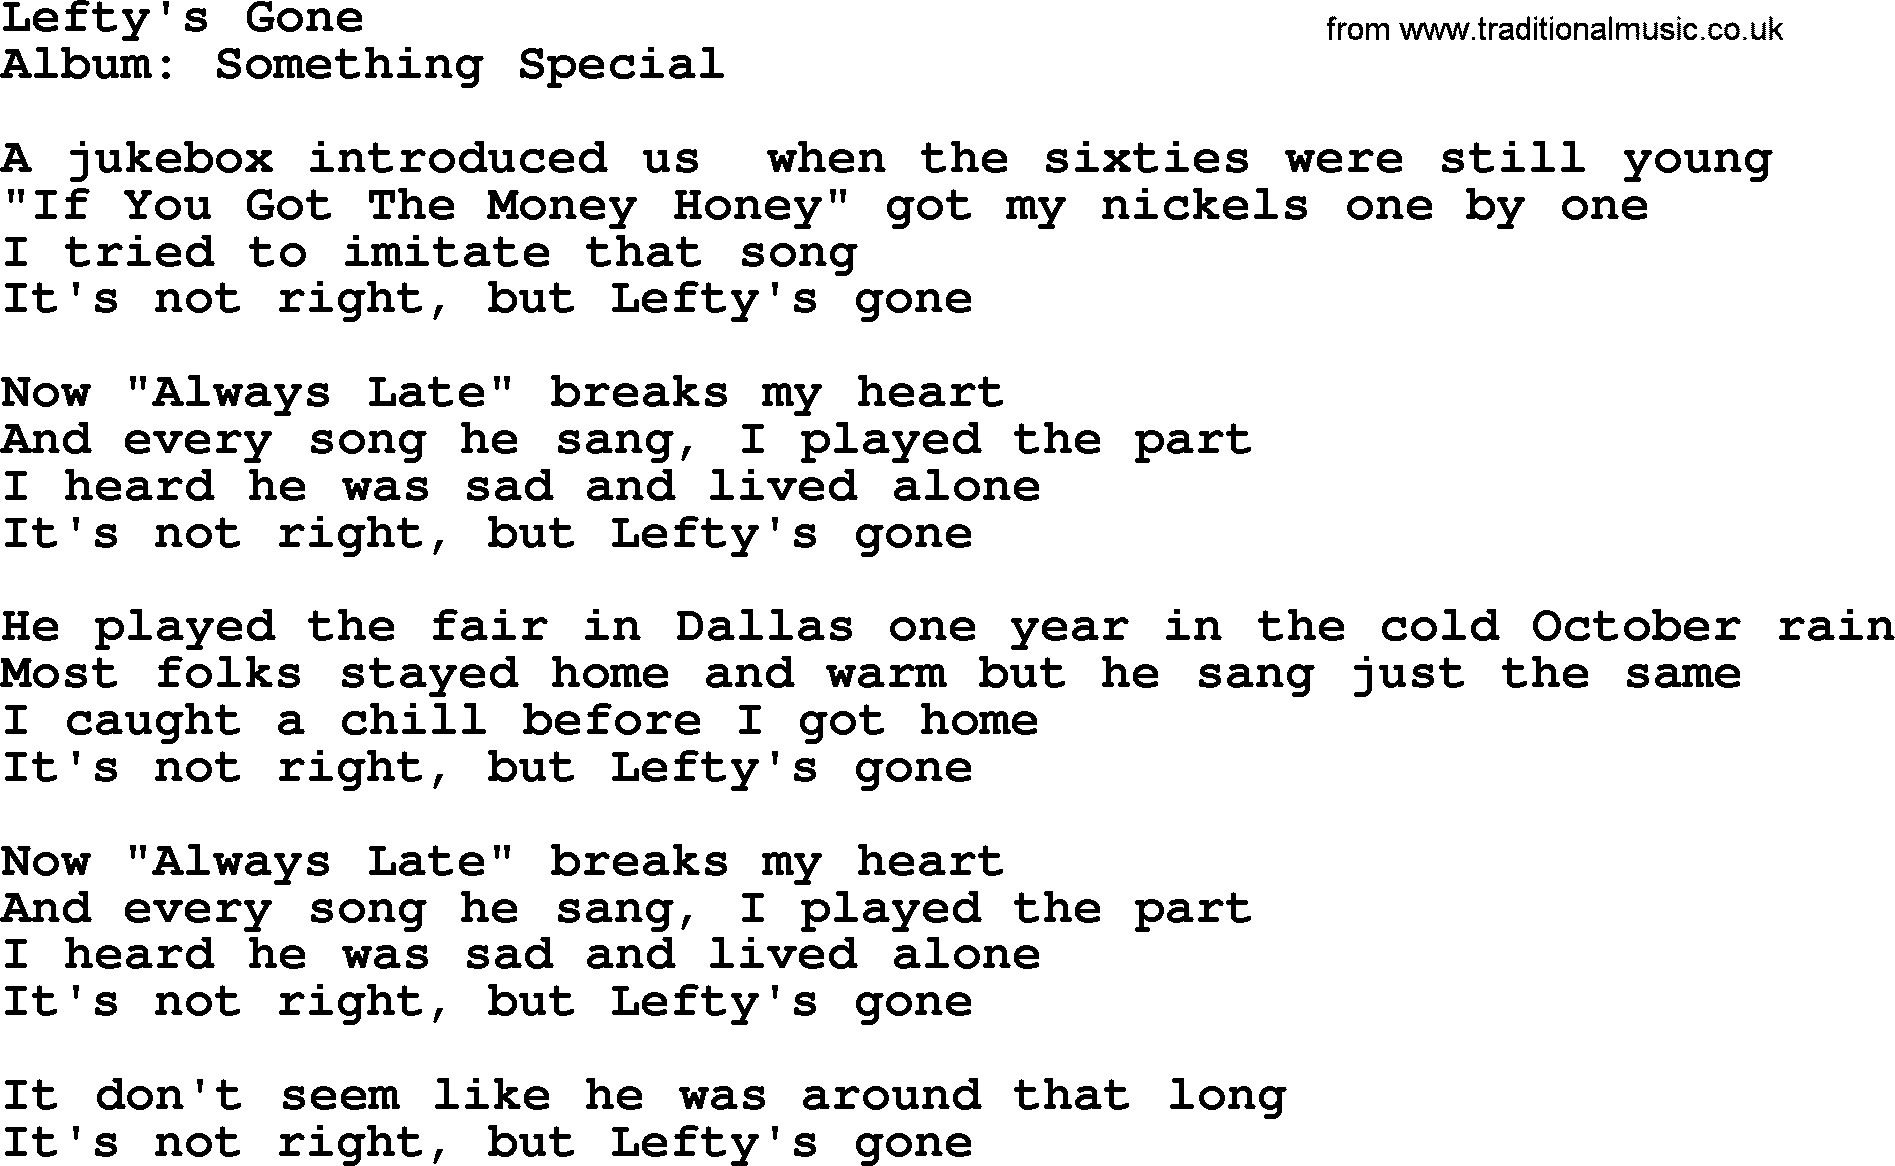 George Strait song: Lefty's Gone, lyrics